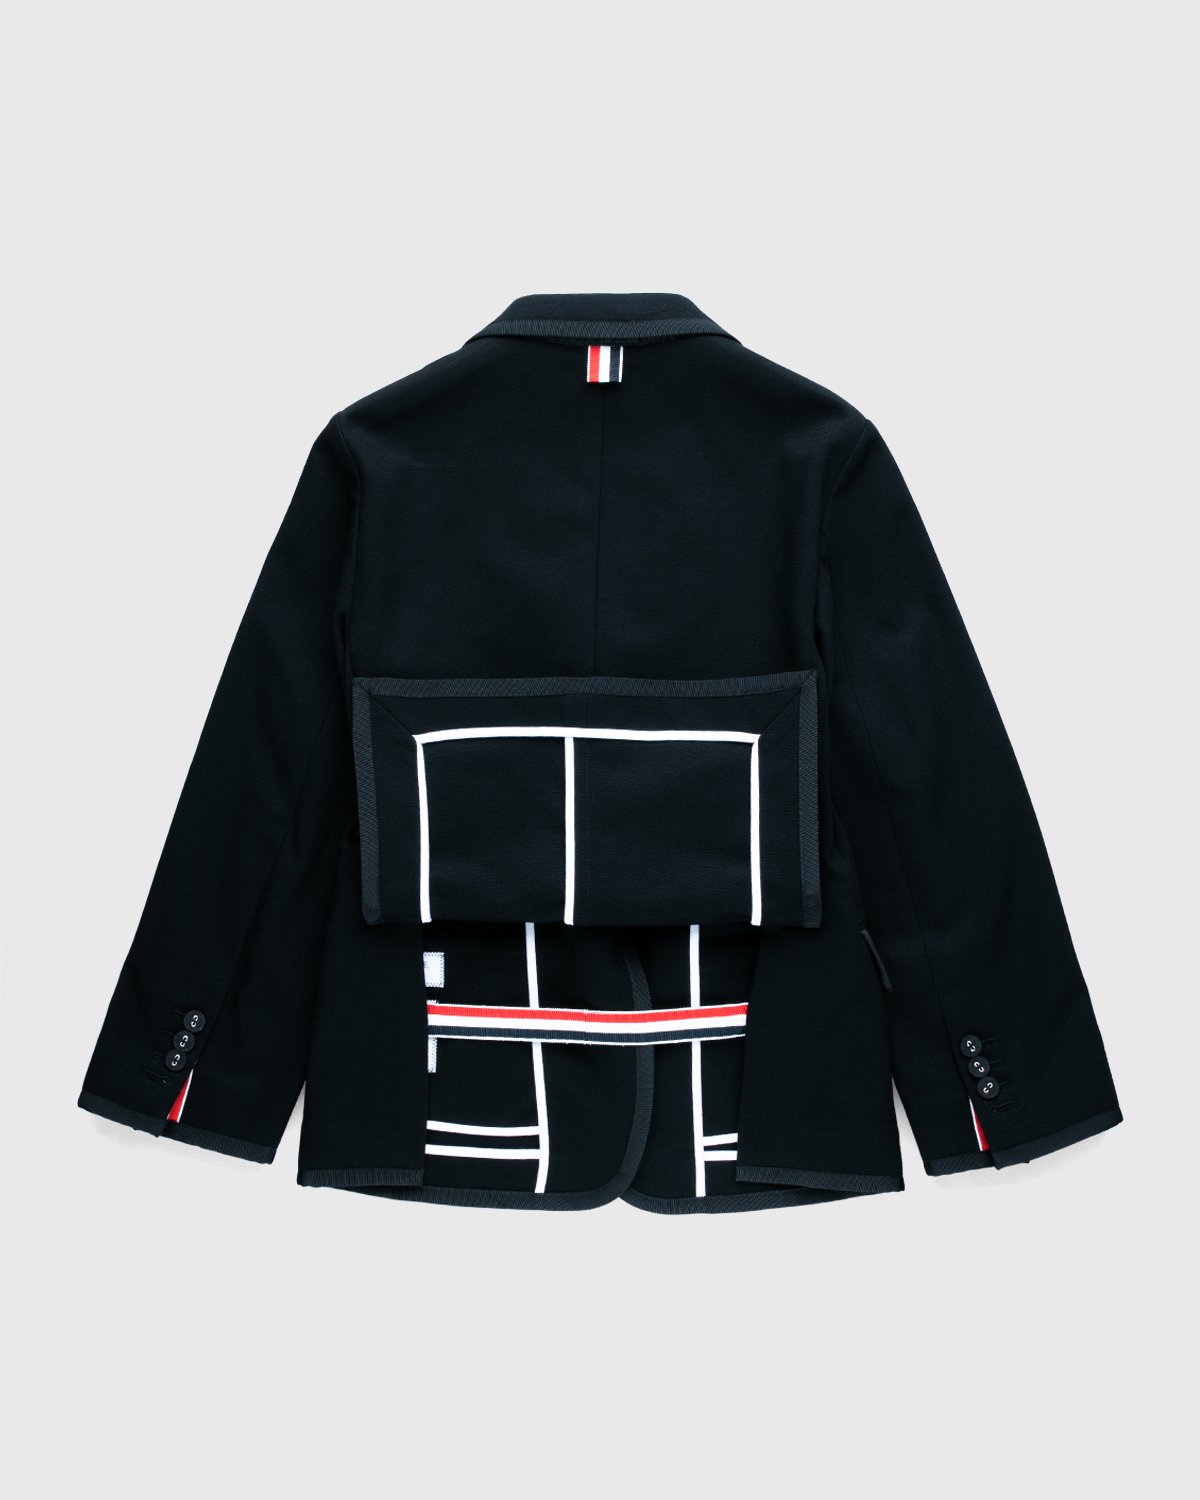 Thom Browne x Highsnobiety - Women’s Deconstructed Sport Jacket Black - Clothing - Black - Image 6